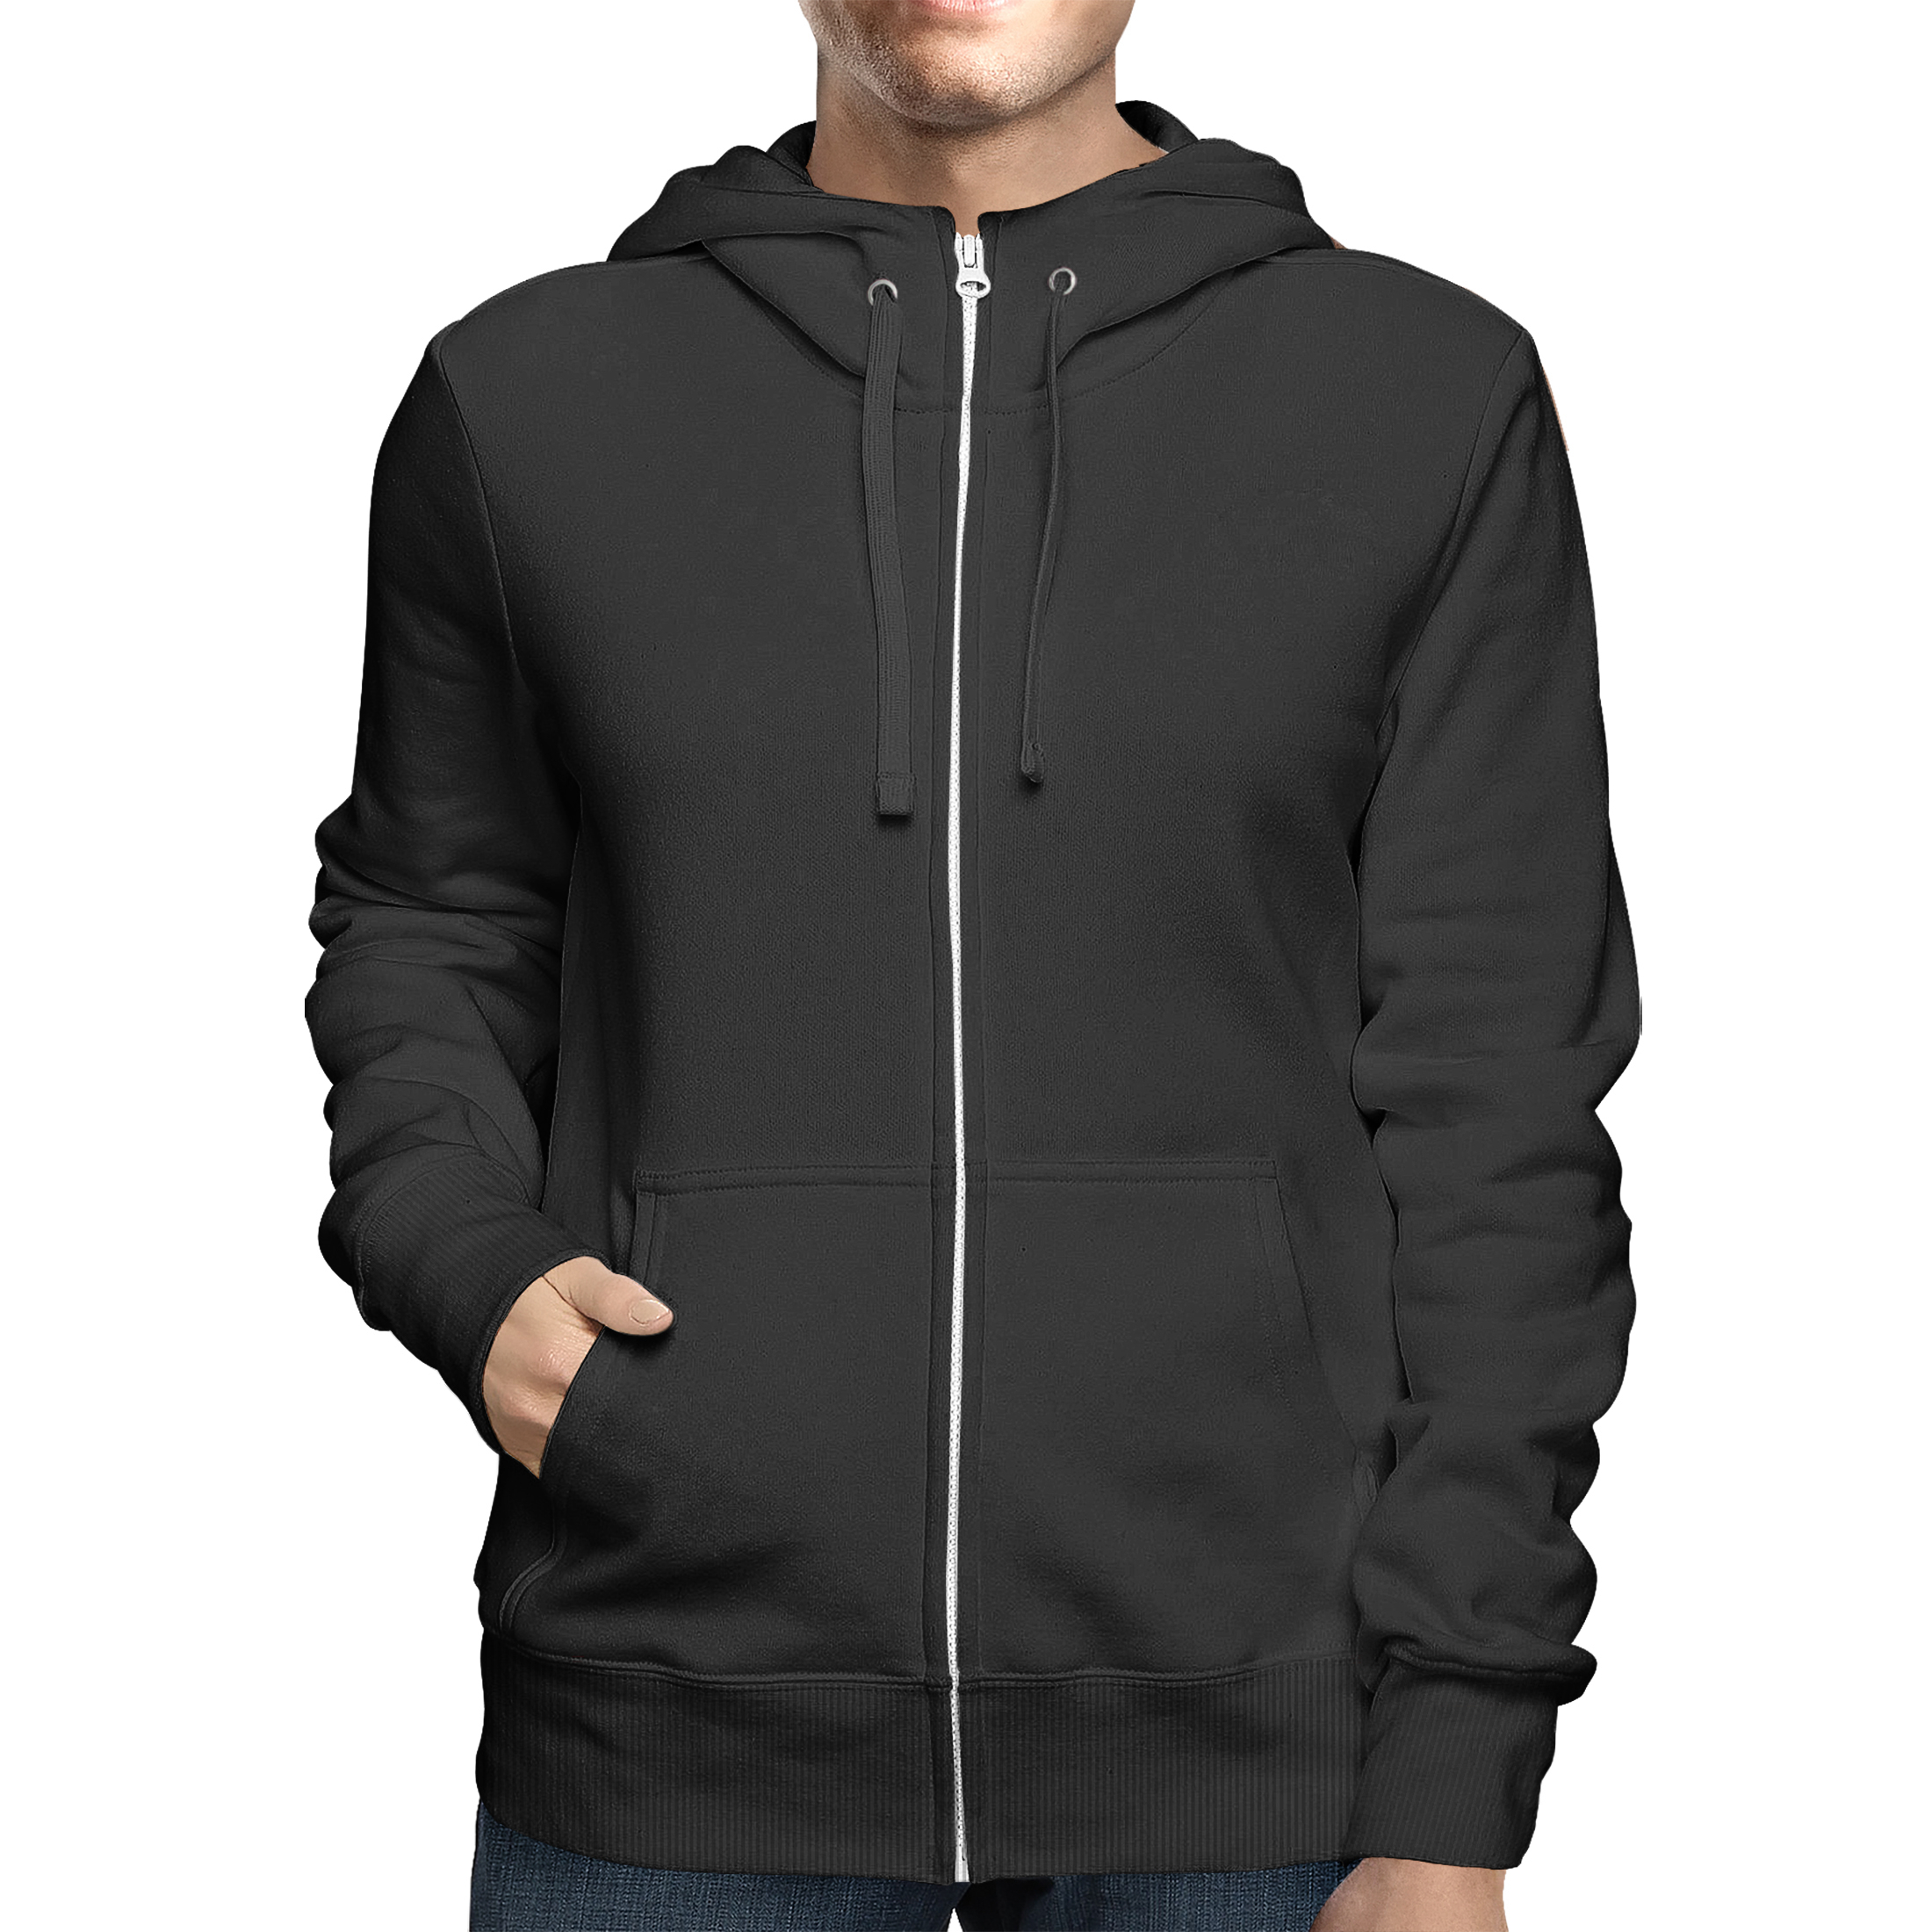 2-Pack: Men's Full Zip Up Fleece-Lined Hoodie Sweatshirt (Big & Tall Size Available) - Black, Medium